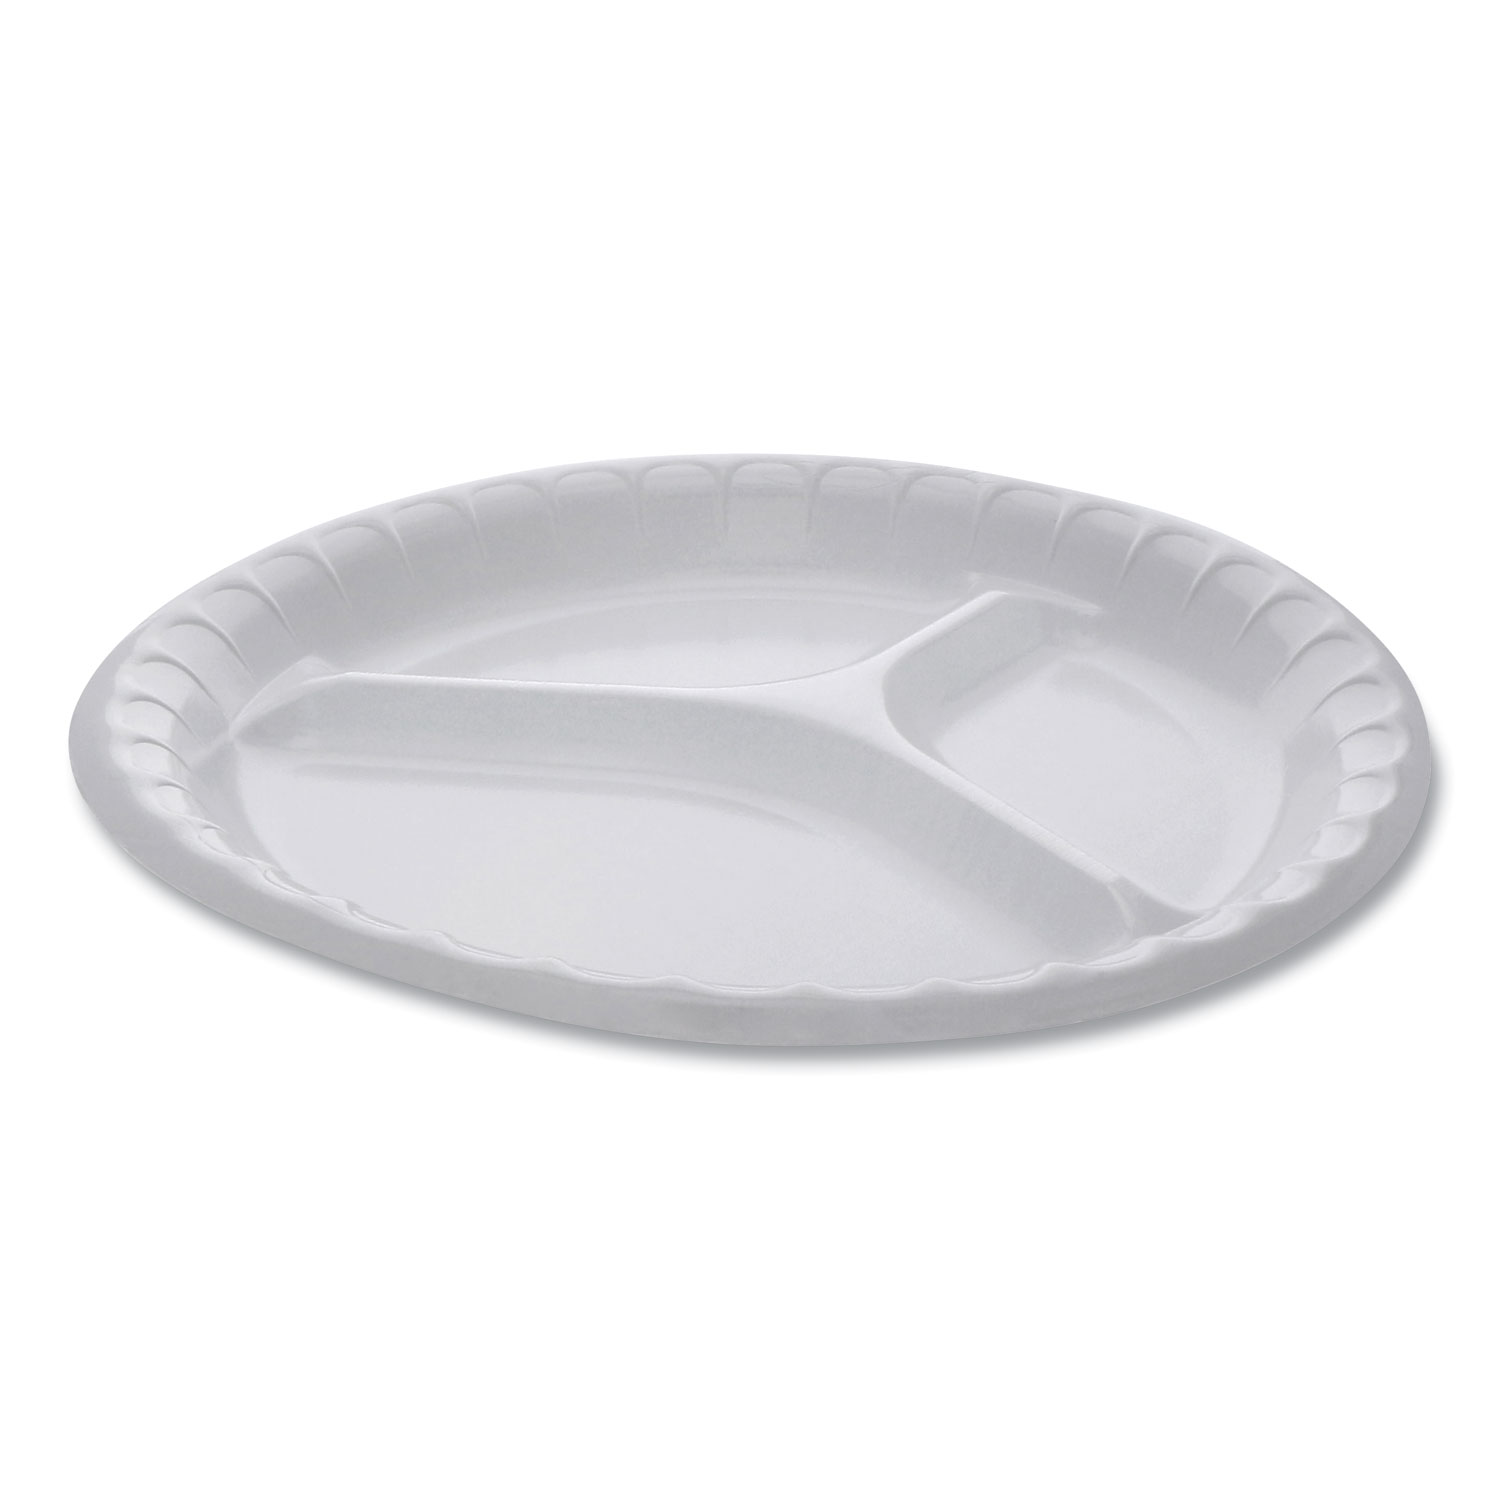  Pactiv 0TK10044000Y Laminated Foam Dinnerware, 3-Compartment Plate, 10.25 Diameter, White, 540/Carton (PCT0TK10044000Y) 